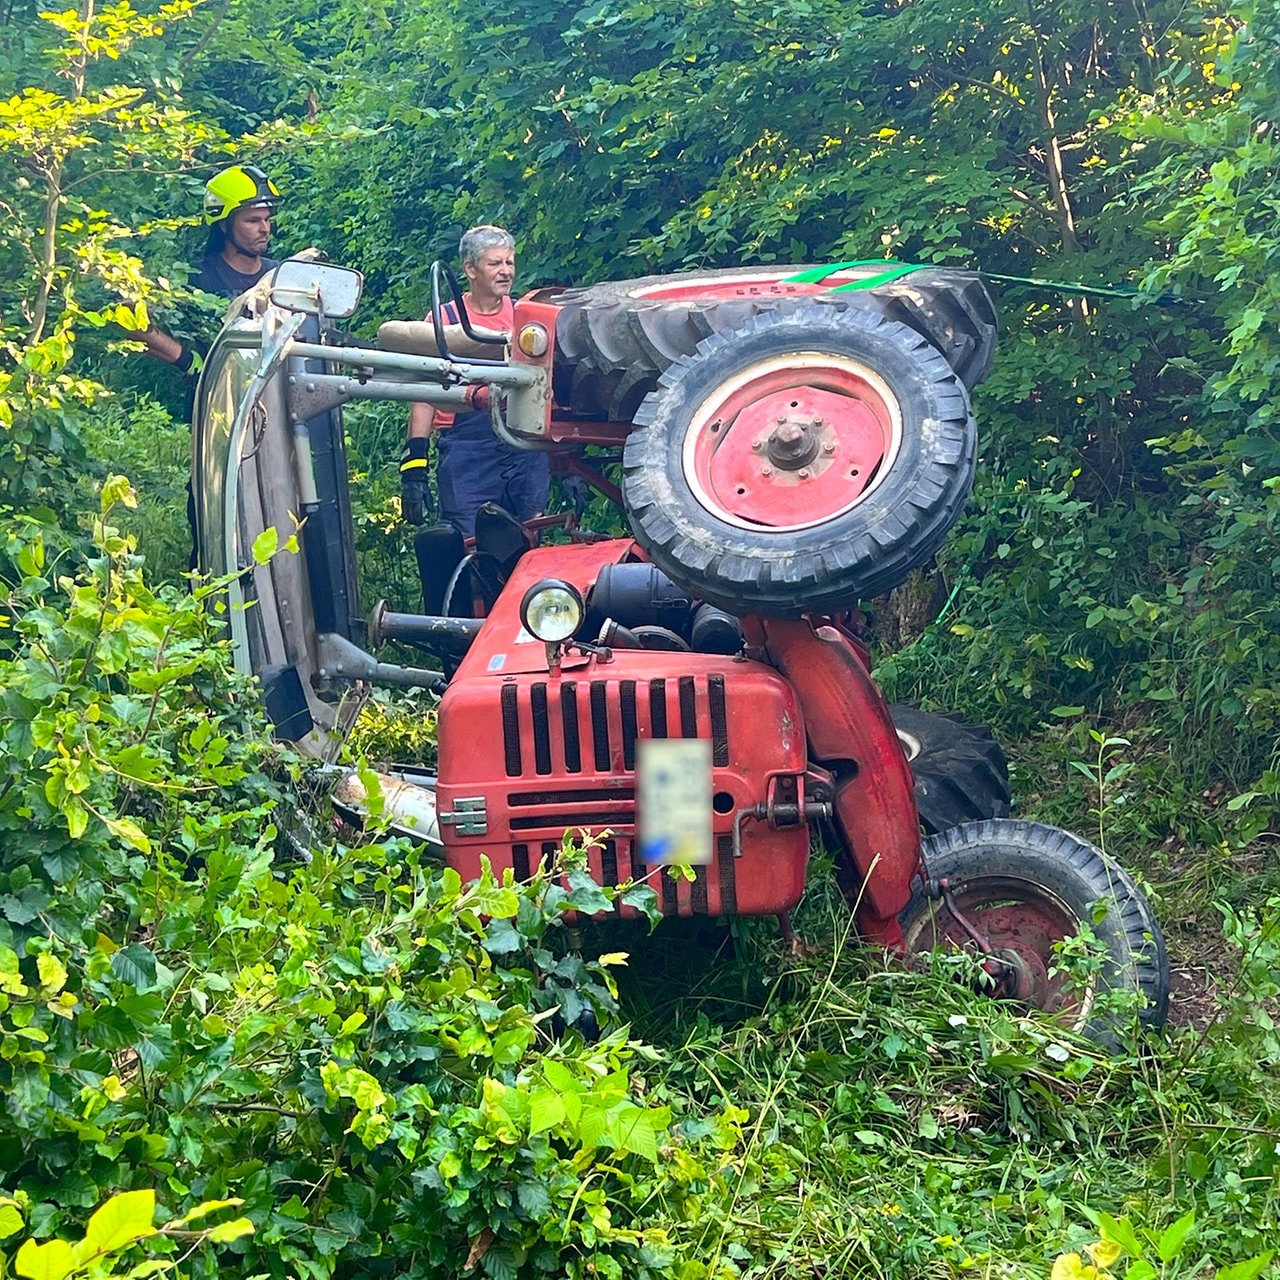 Nordthüringen: Traktor kippt im Wald um - Fahrer schwer verletzt